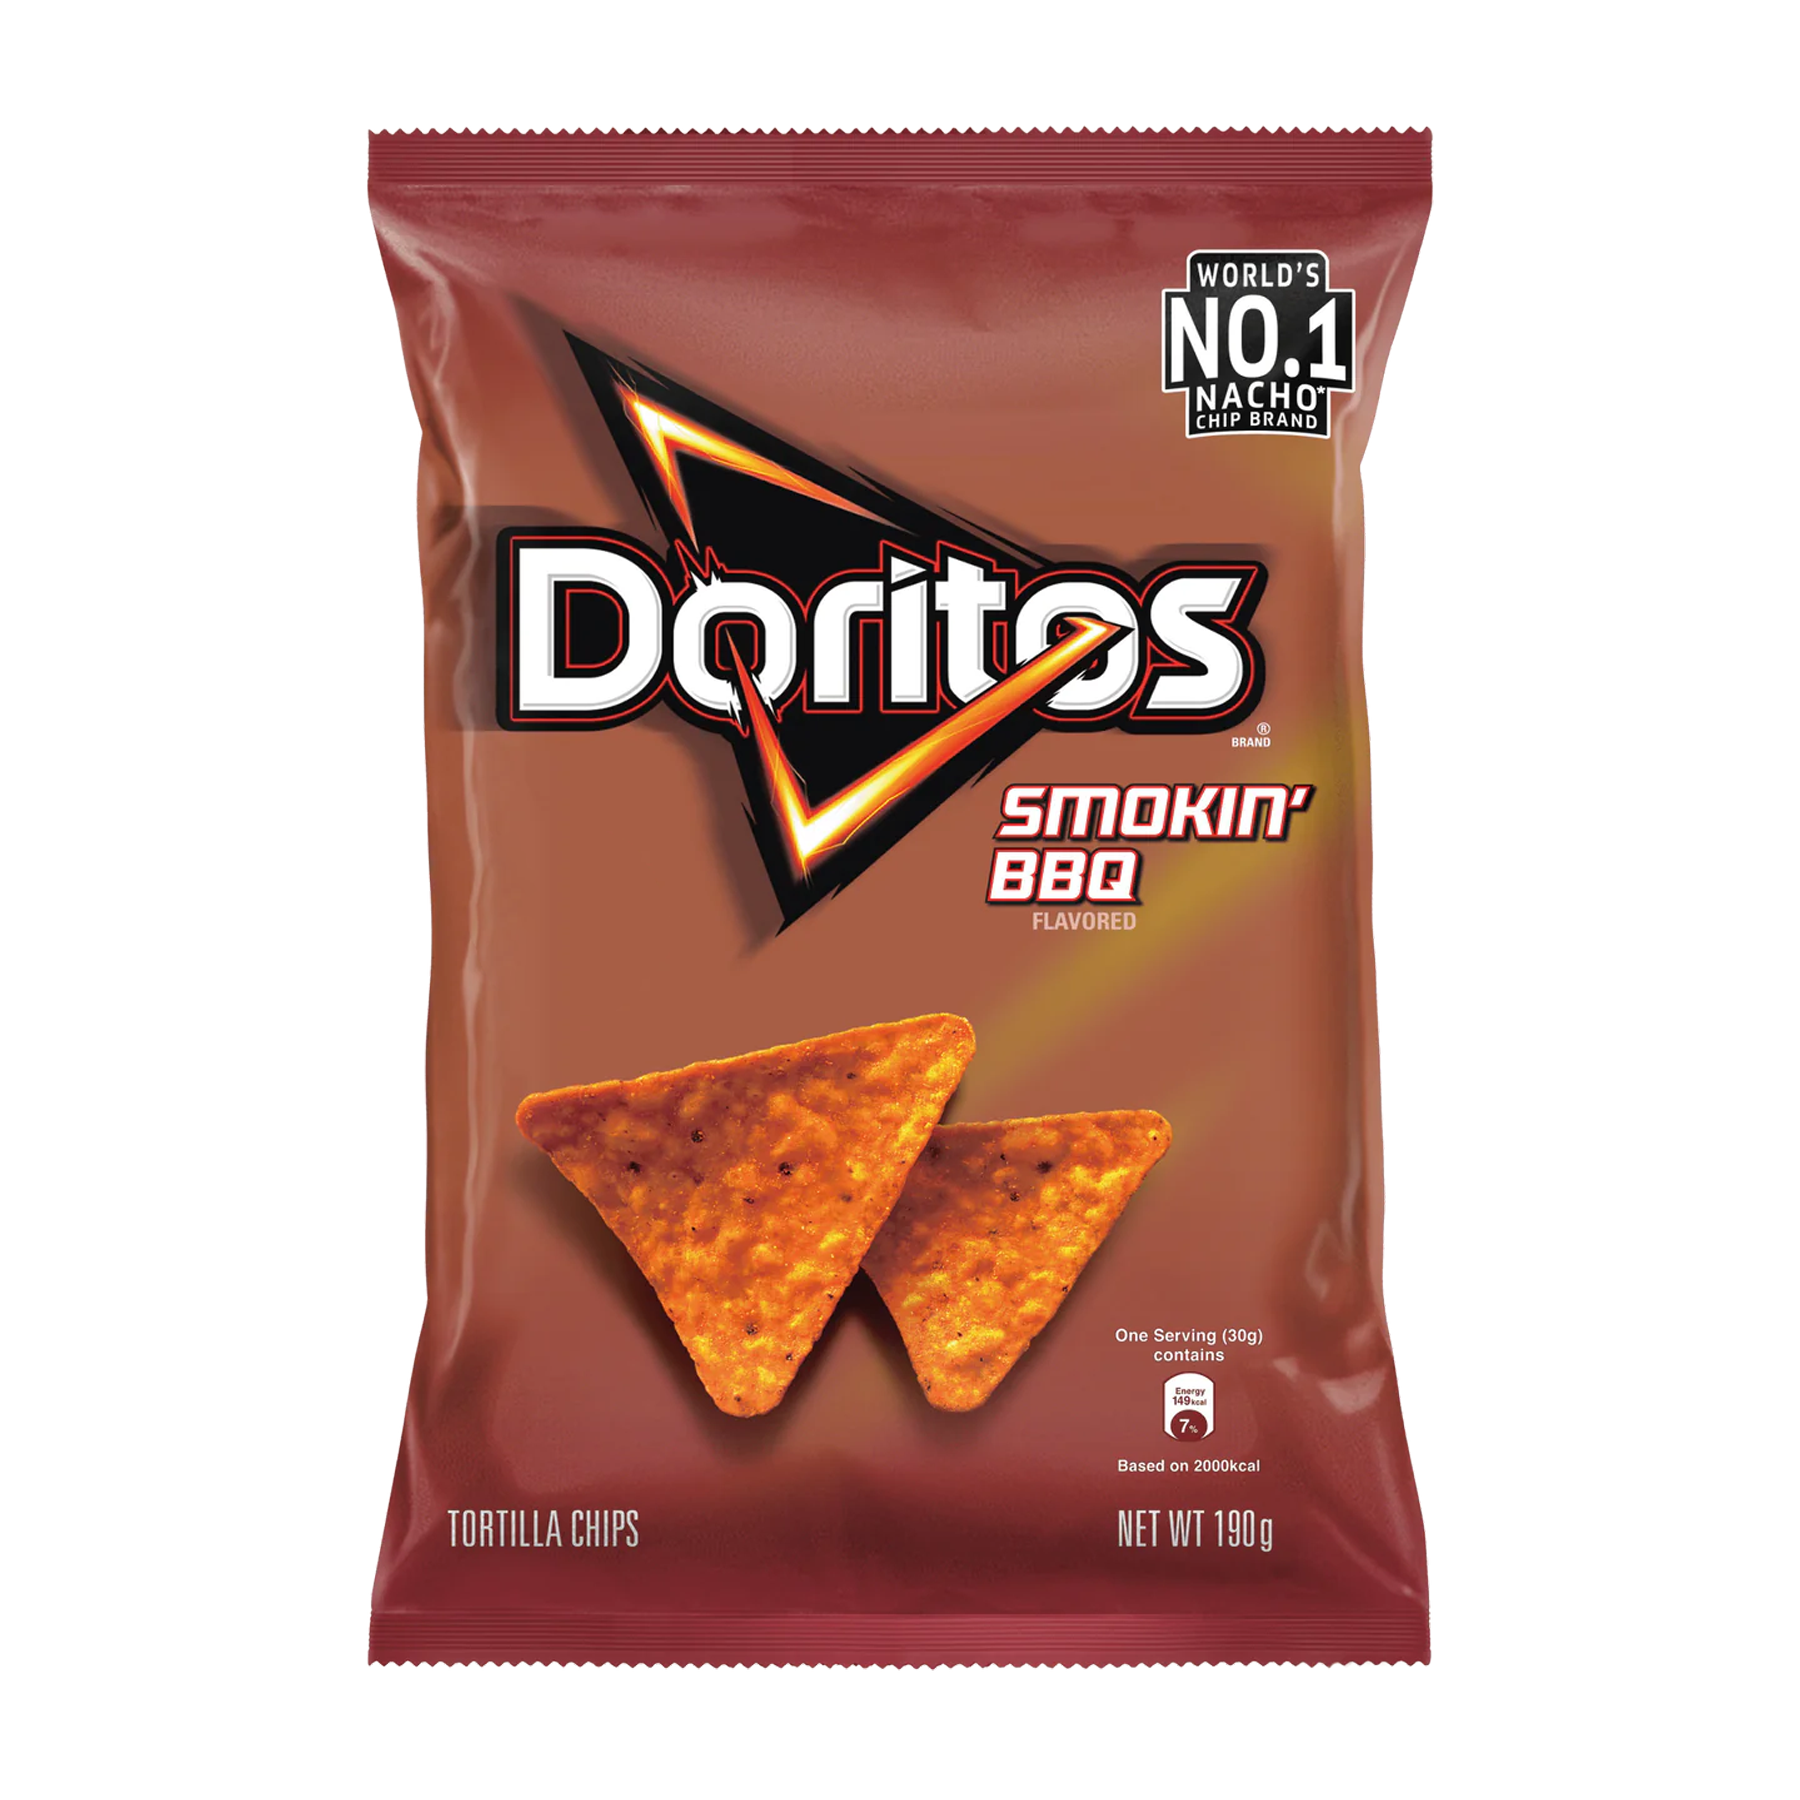 Doritos Smokin Bbq Flavored Chips